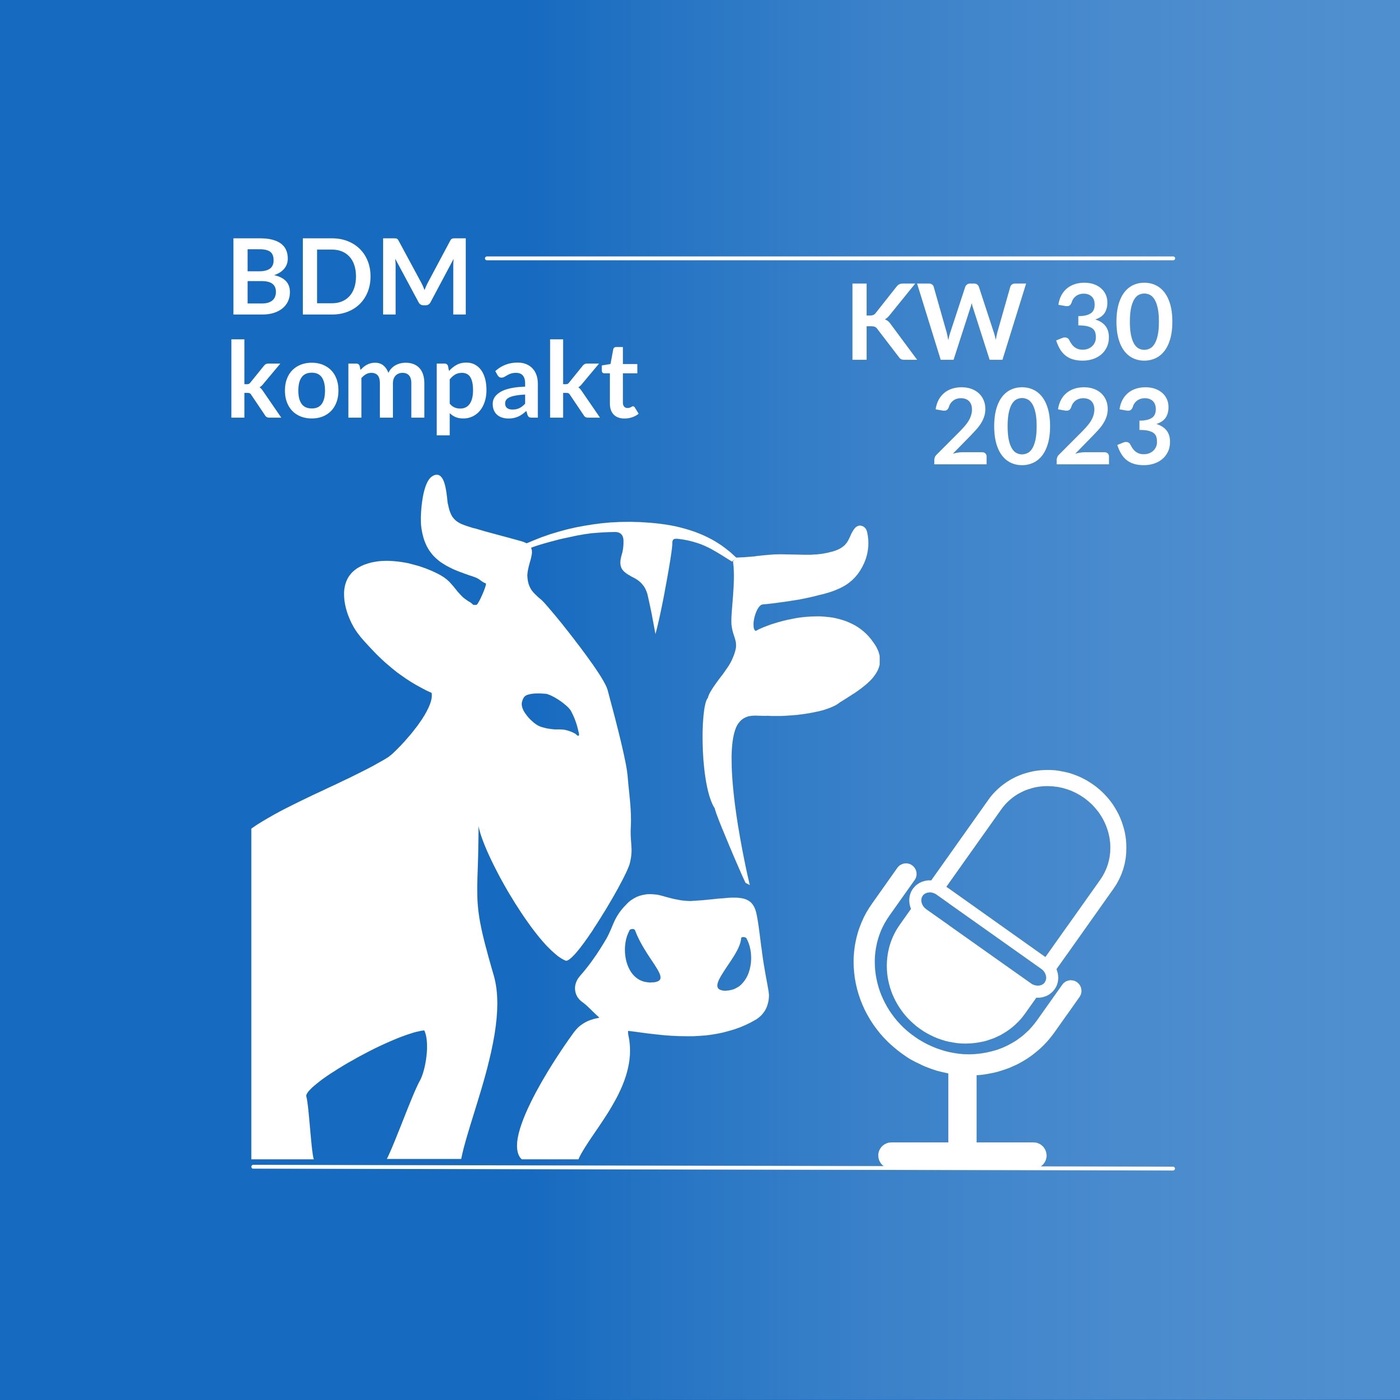 BDM kompakt KW 30/2023